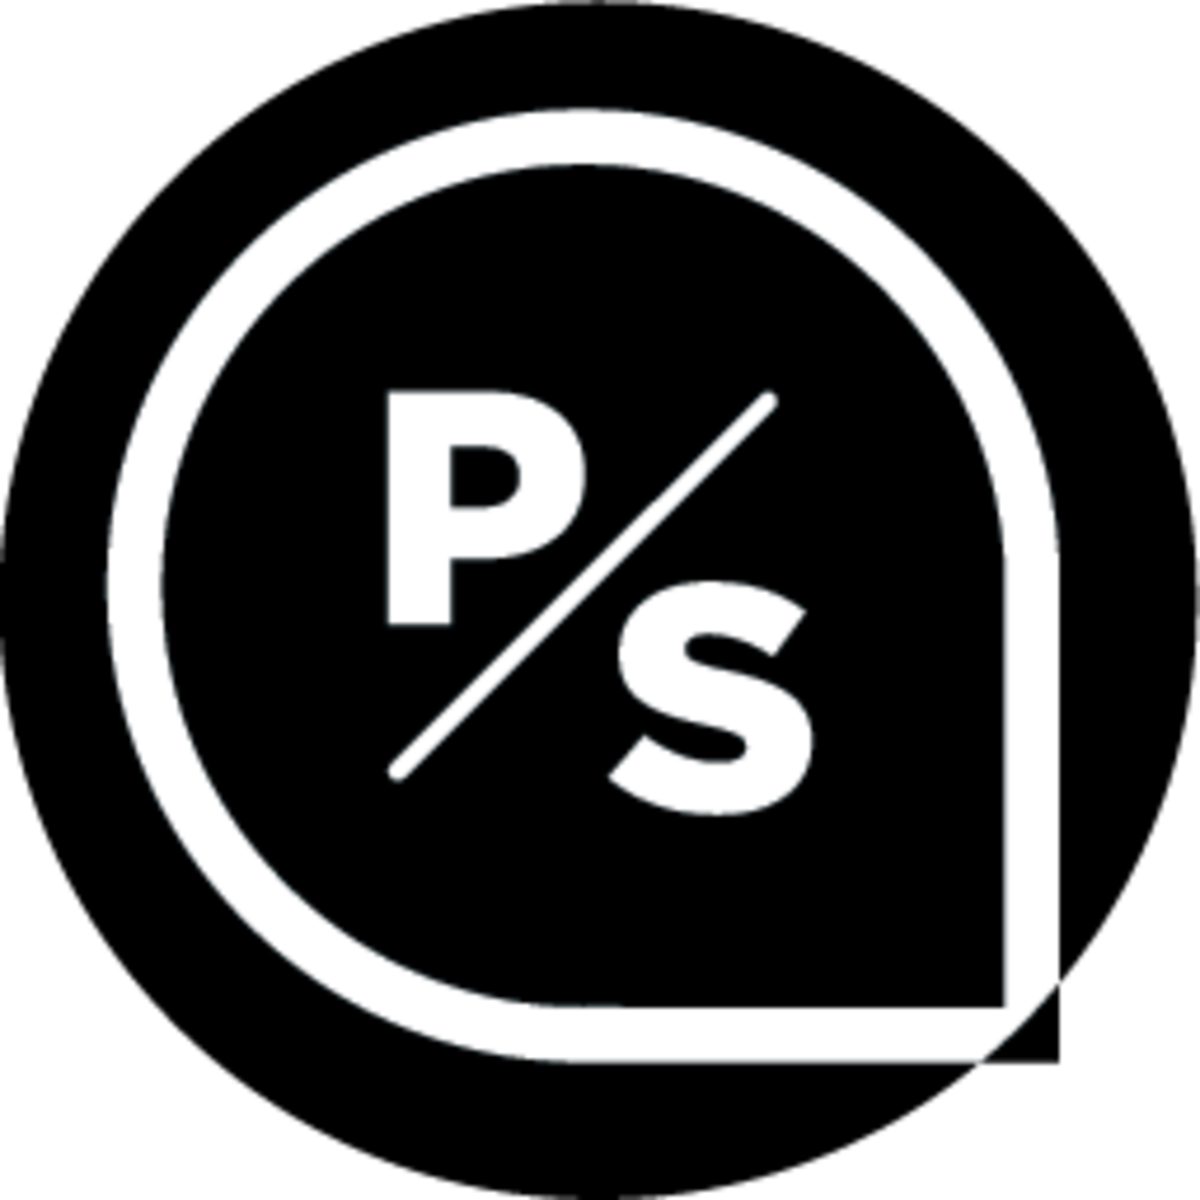 ps-logo-png